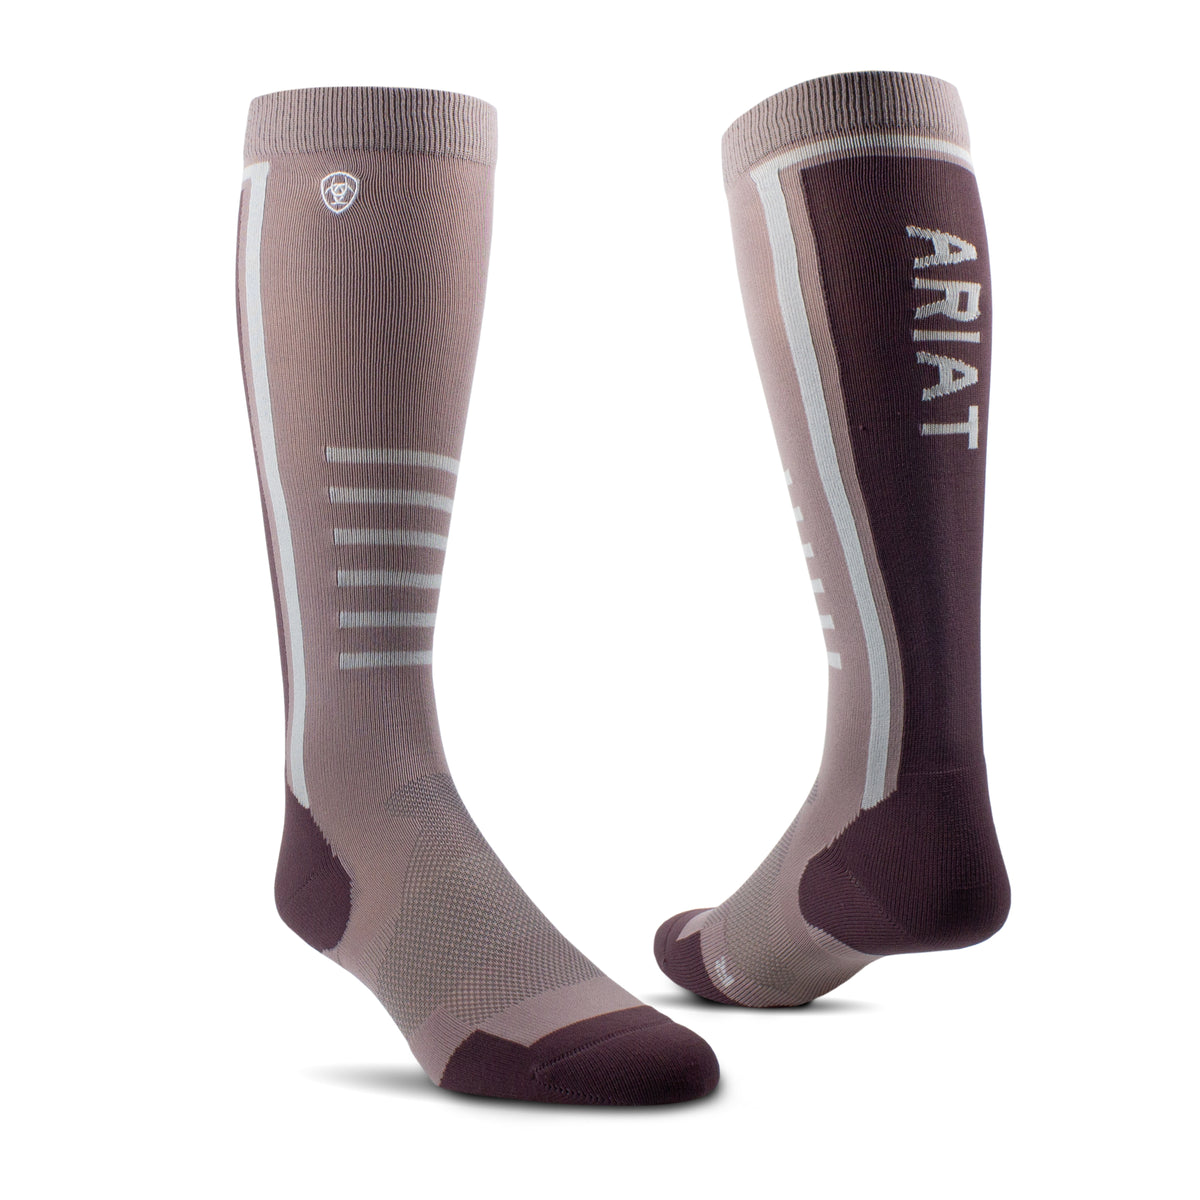 Ariat Uni Ariattek slimline Performance Socks - Quail/Huckleberry